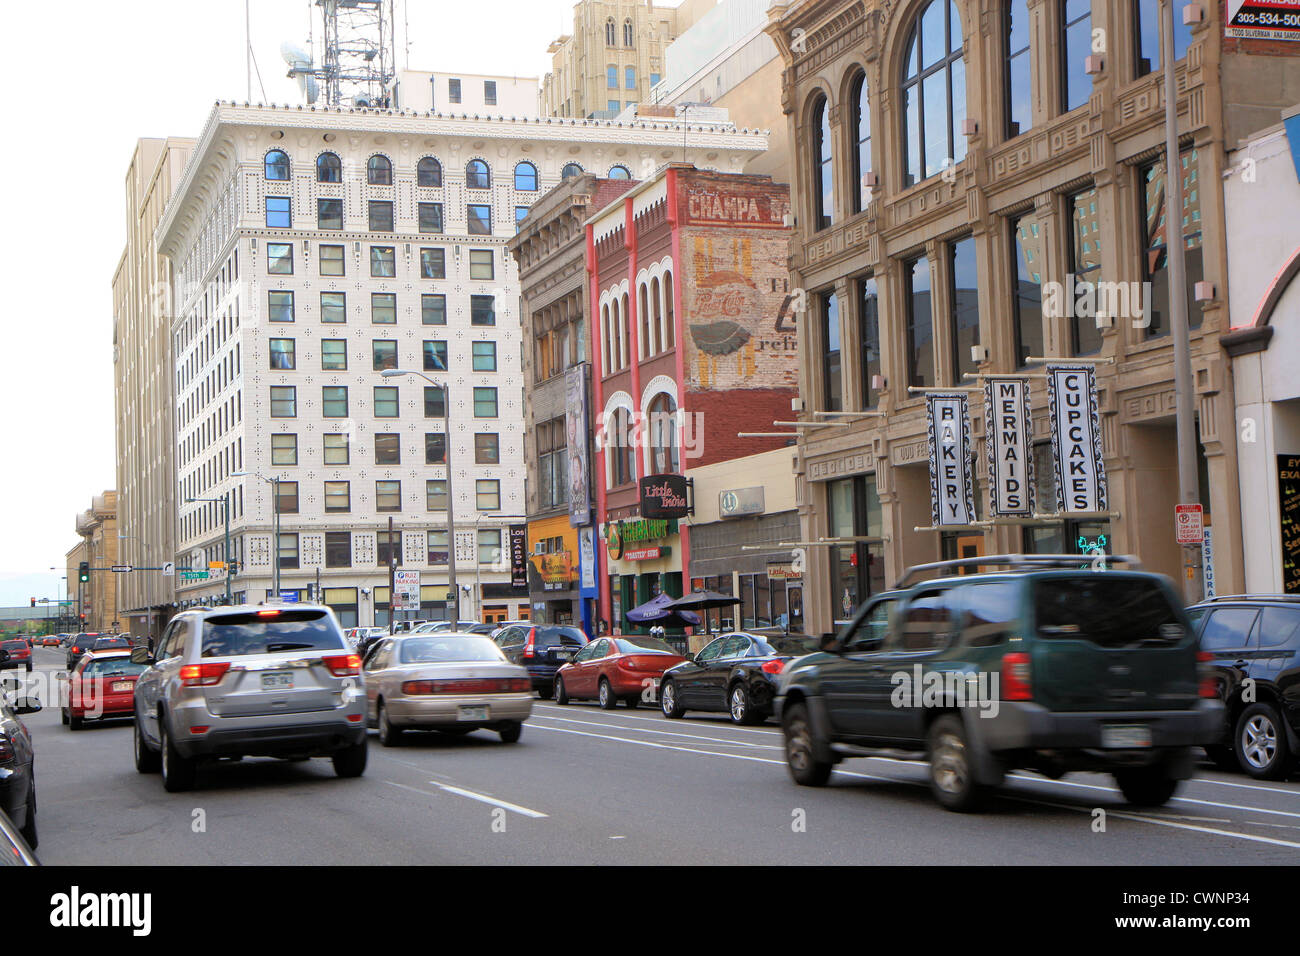 Champa street, Downtown, Denver, Colorado, USA Stock Photo